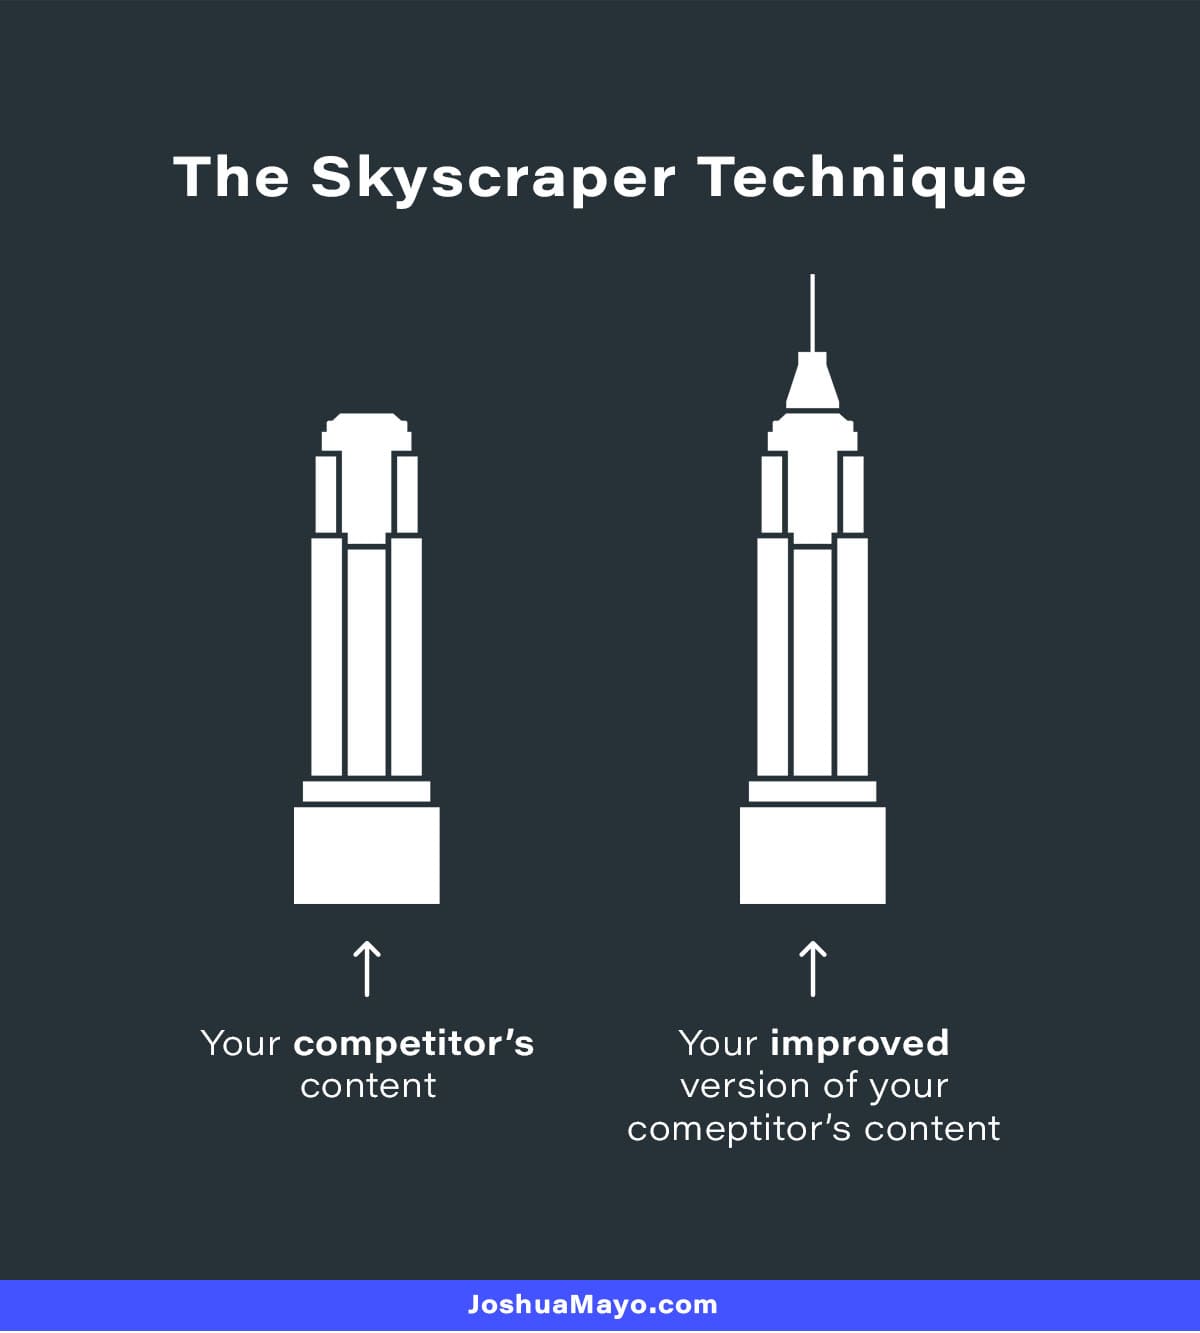 the skyscraper technique brian dean improving on your competitor's content